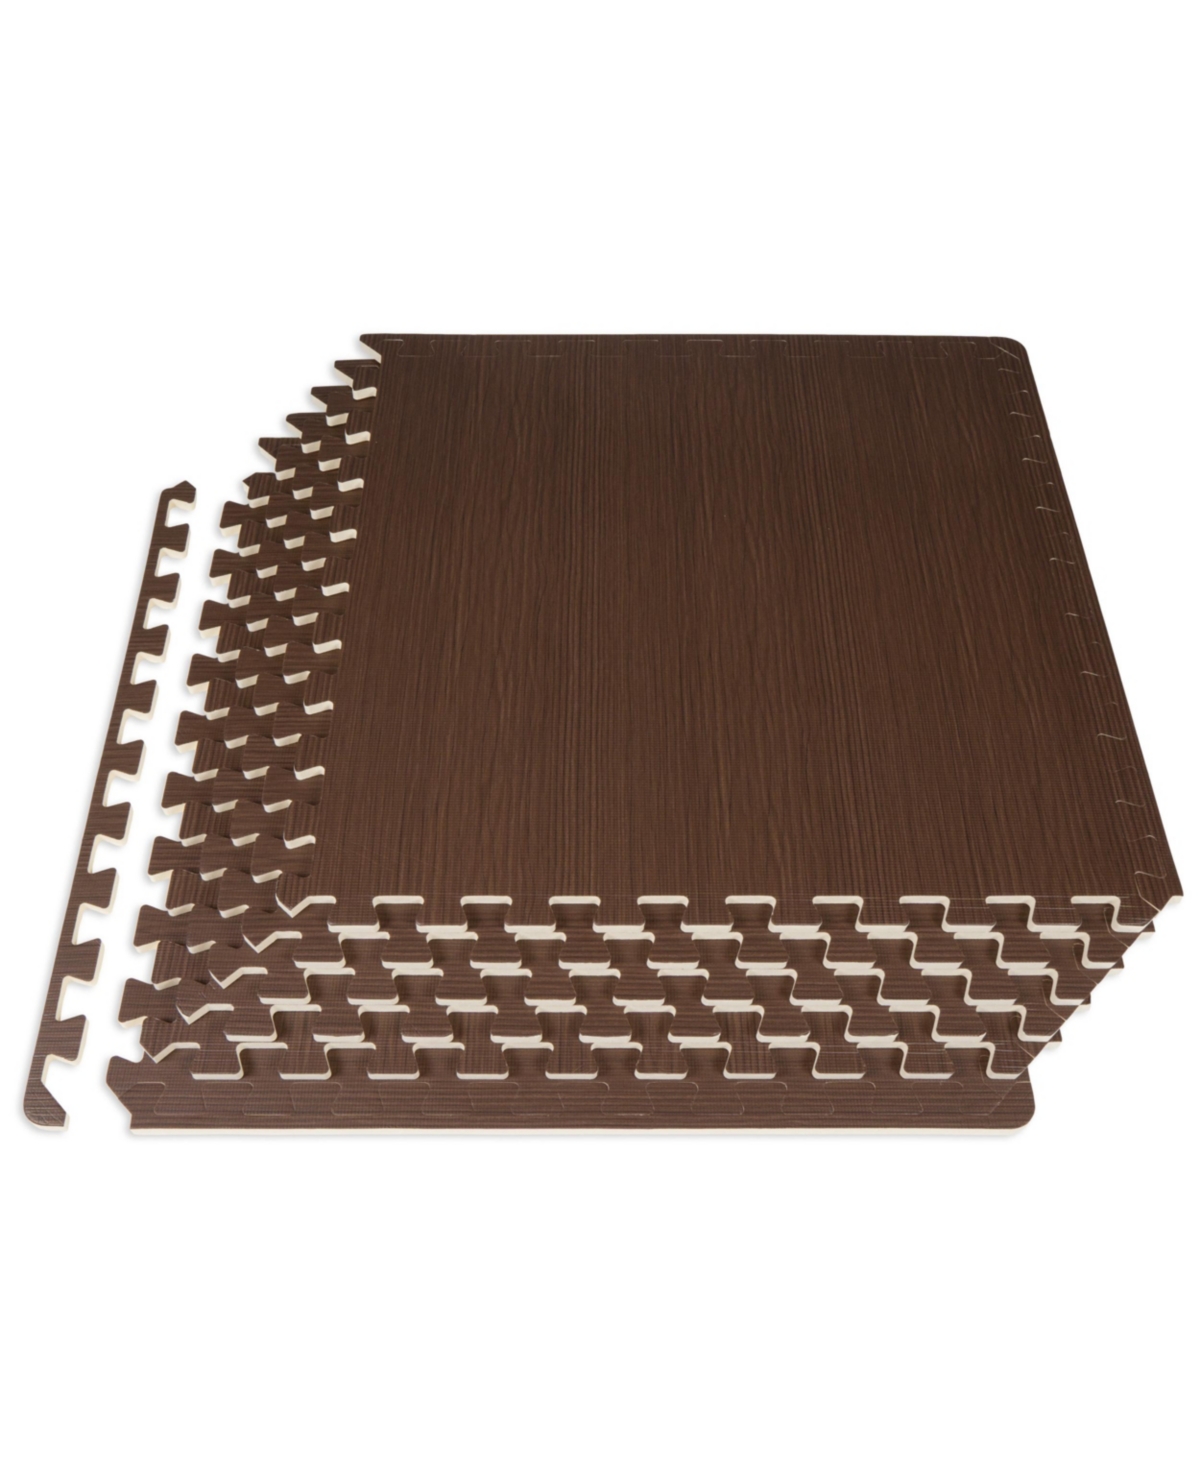 Wood Grain Puzzle Mat 1/2-in, 24 Sq Ft - 6 Tiles - Dark walnut